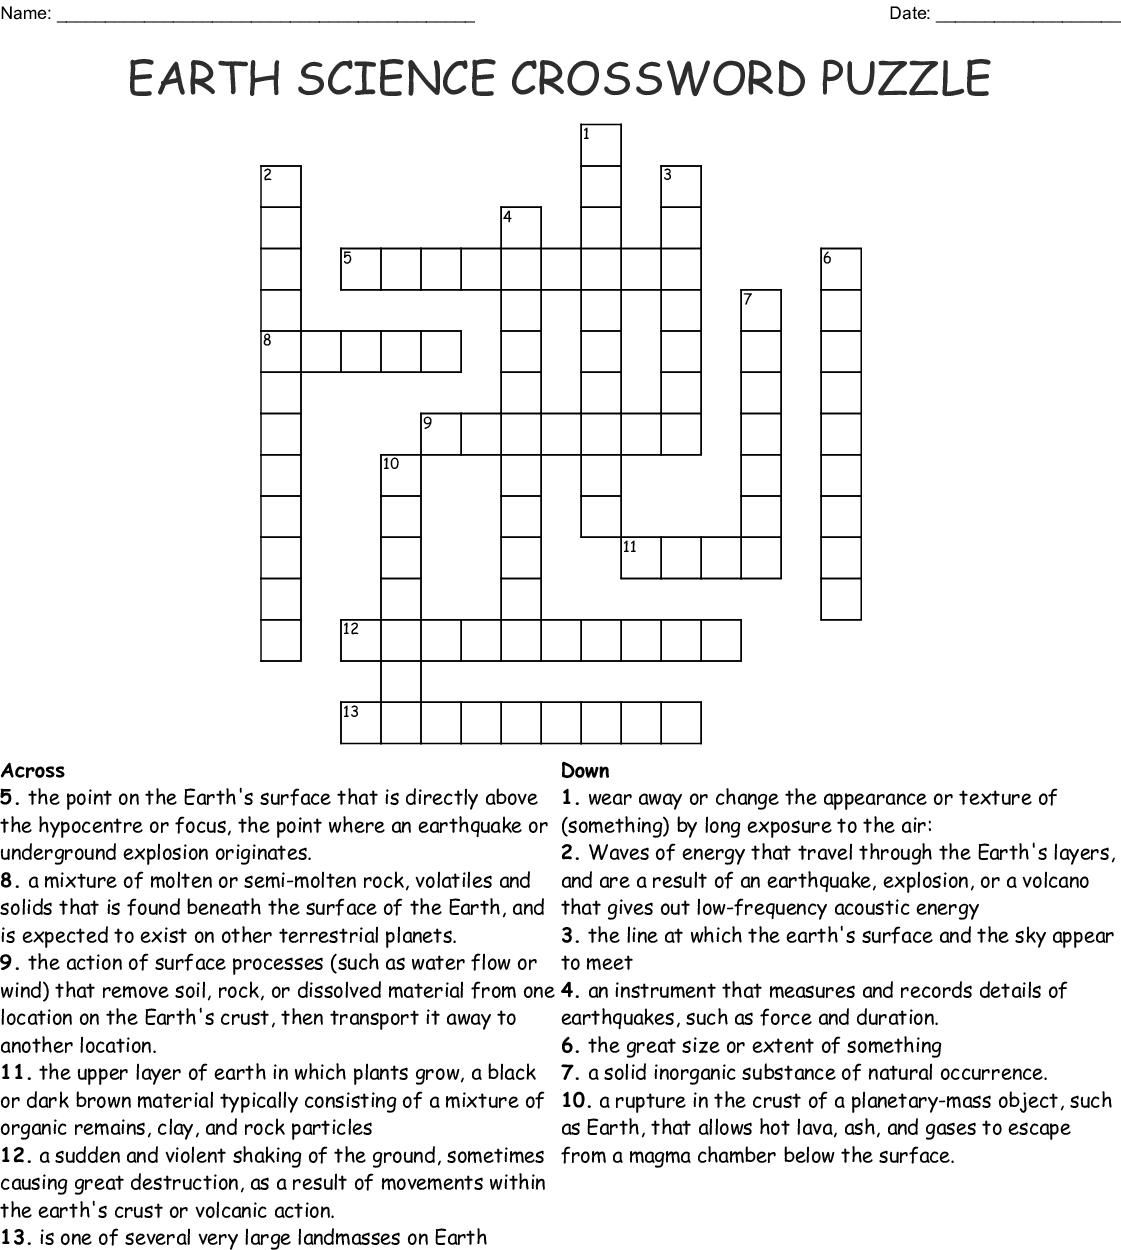 Earth Science Crossword Puzzle Crossword - Wordmint - Science Crossword Puzzles Printable With Answers